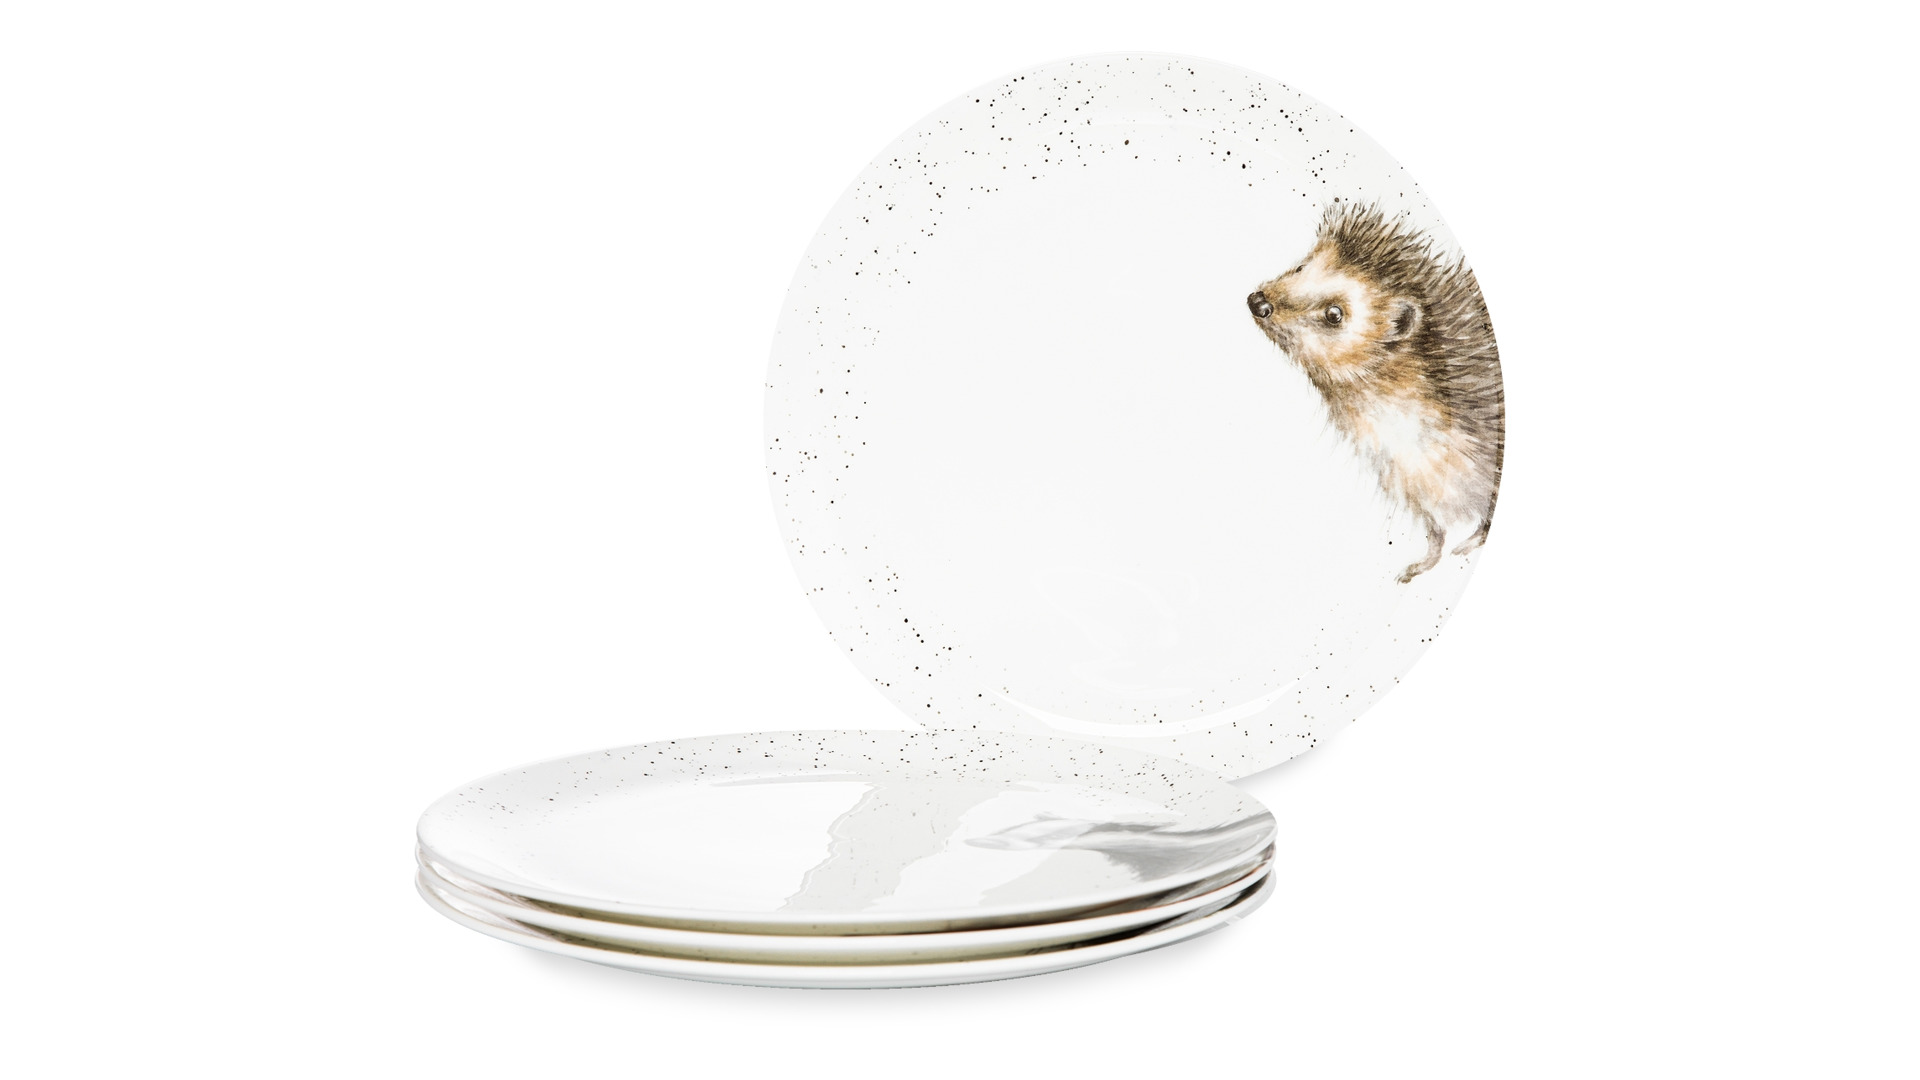 Набор тарелок обеденных Royal Worcester Забавная фауна Барсук, еж, лиса, сова 26,5 см, 4 шт